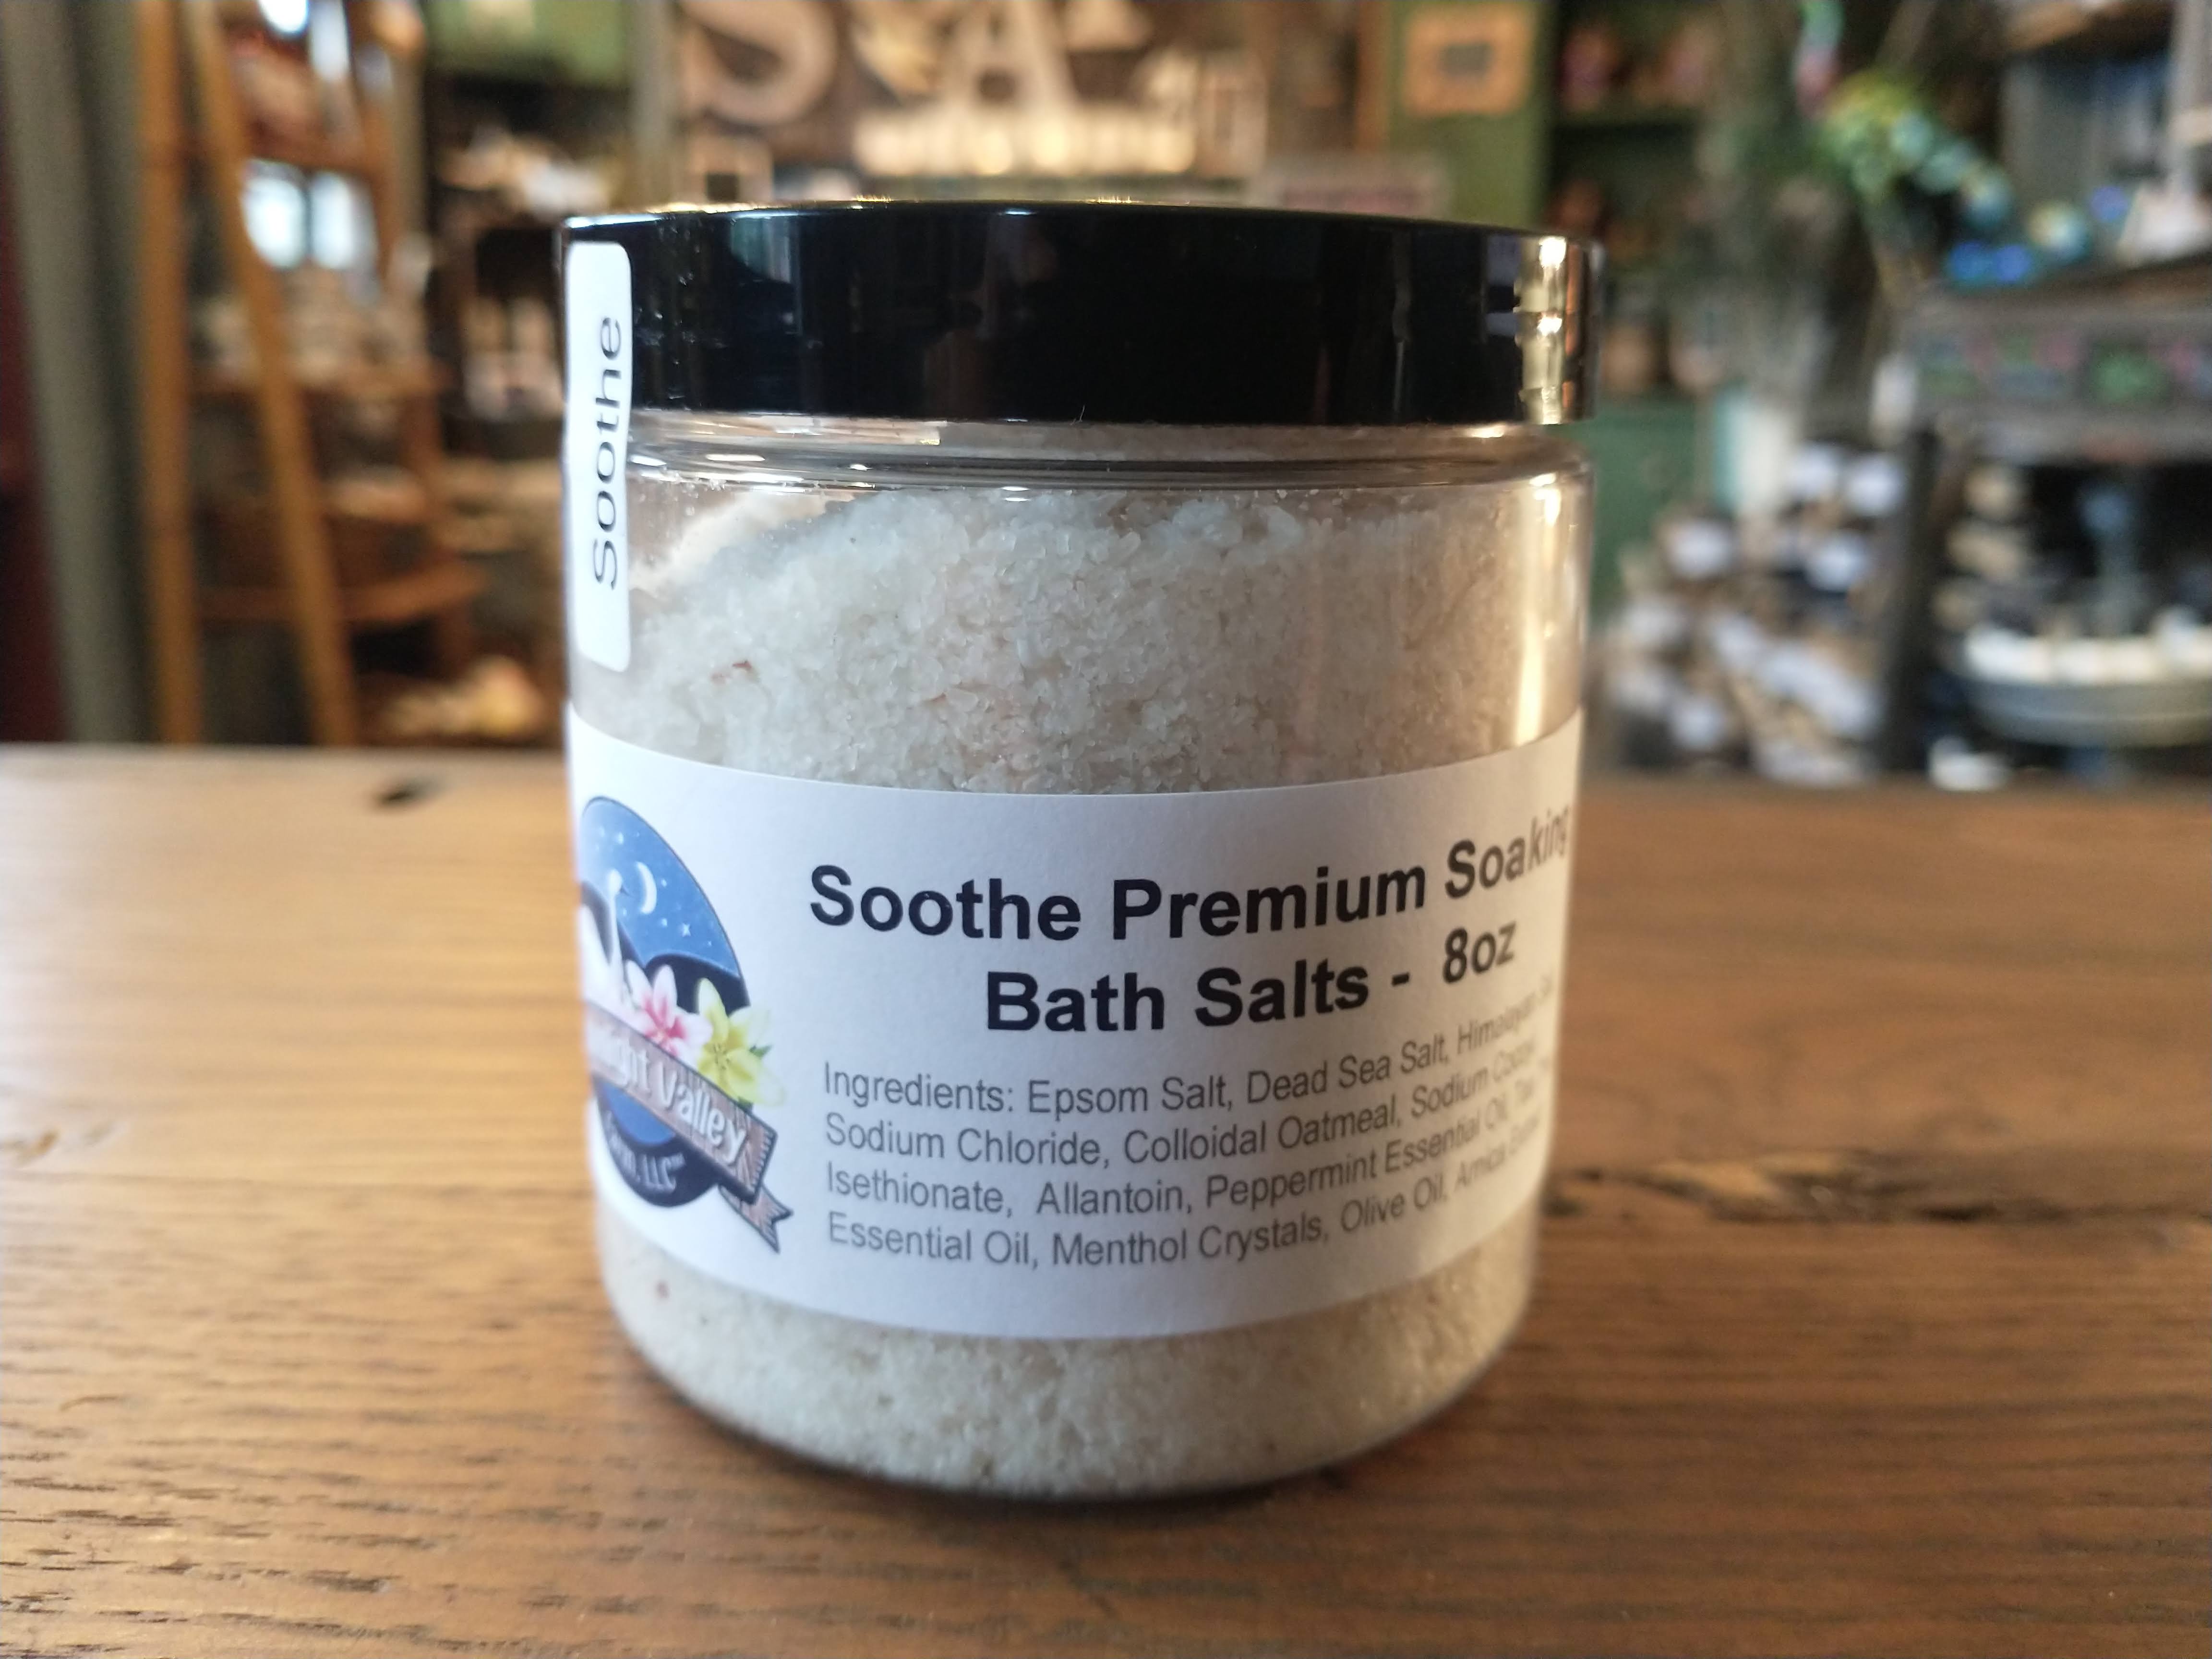 Soothe Premium Soaking Bath Salts